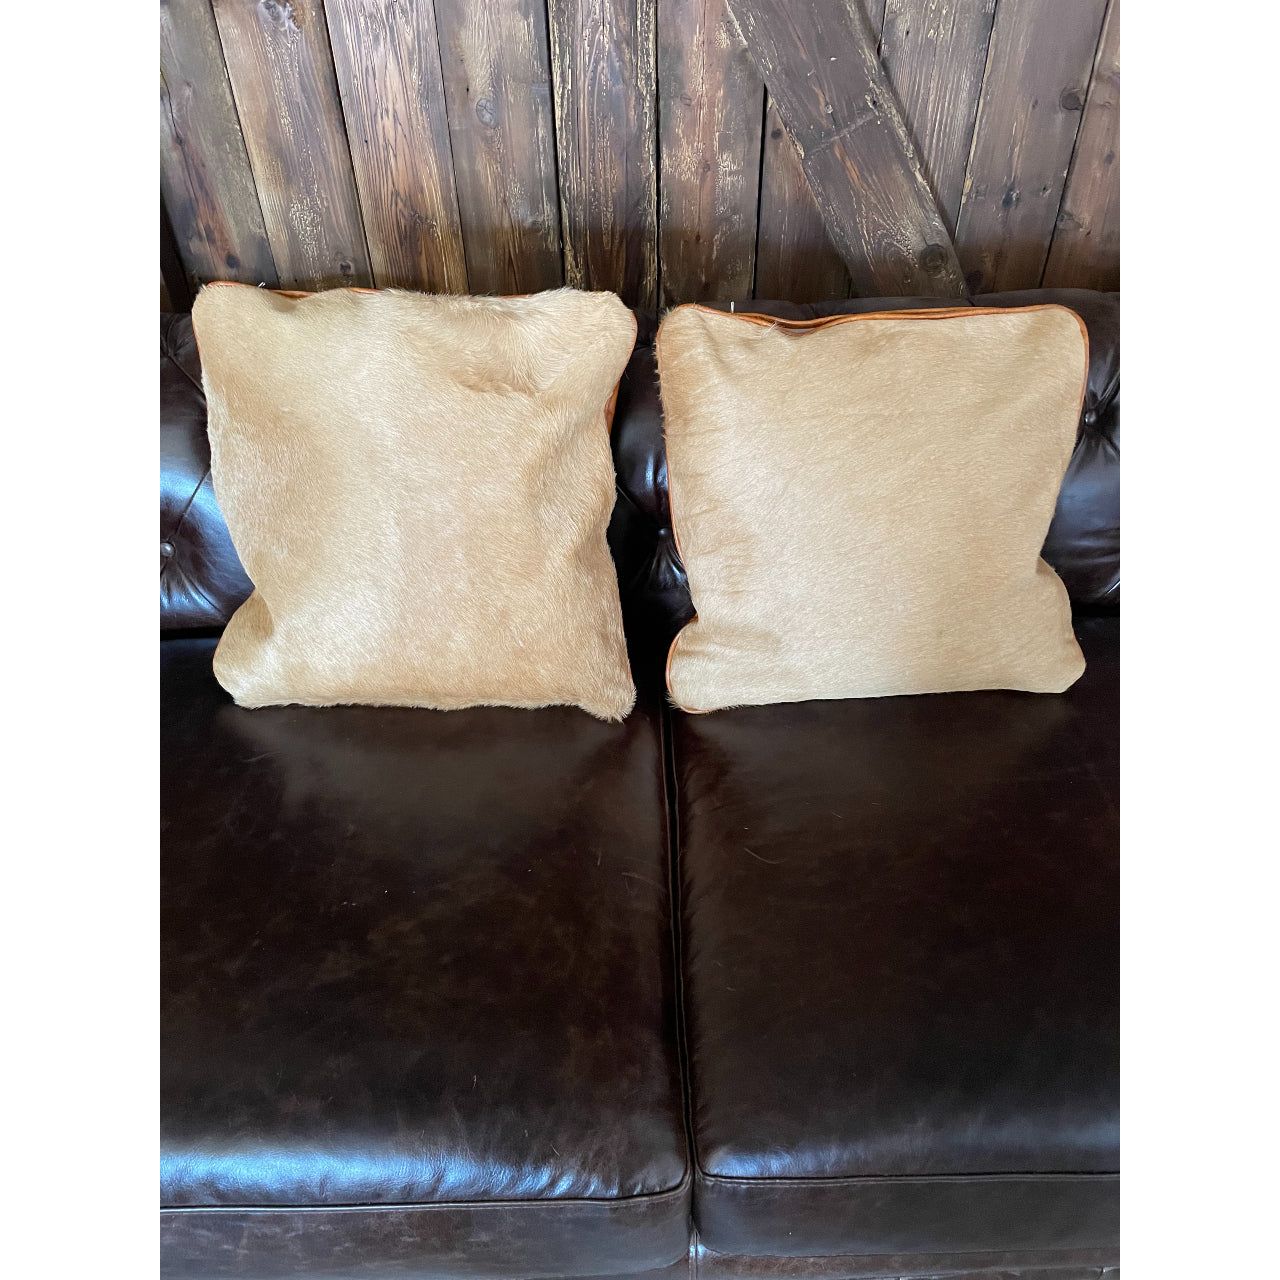 Cowhide Pillow Pair #16 & #17